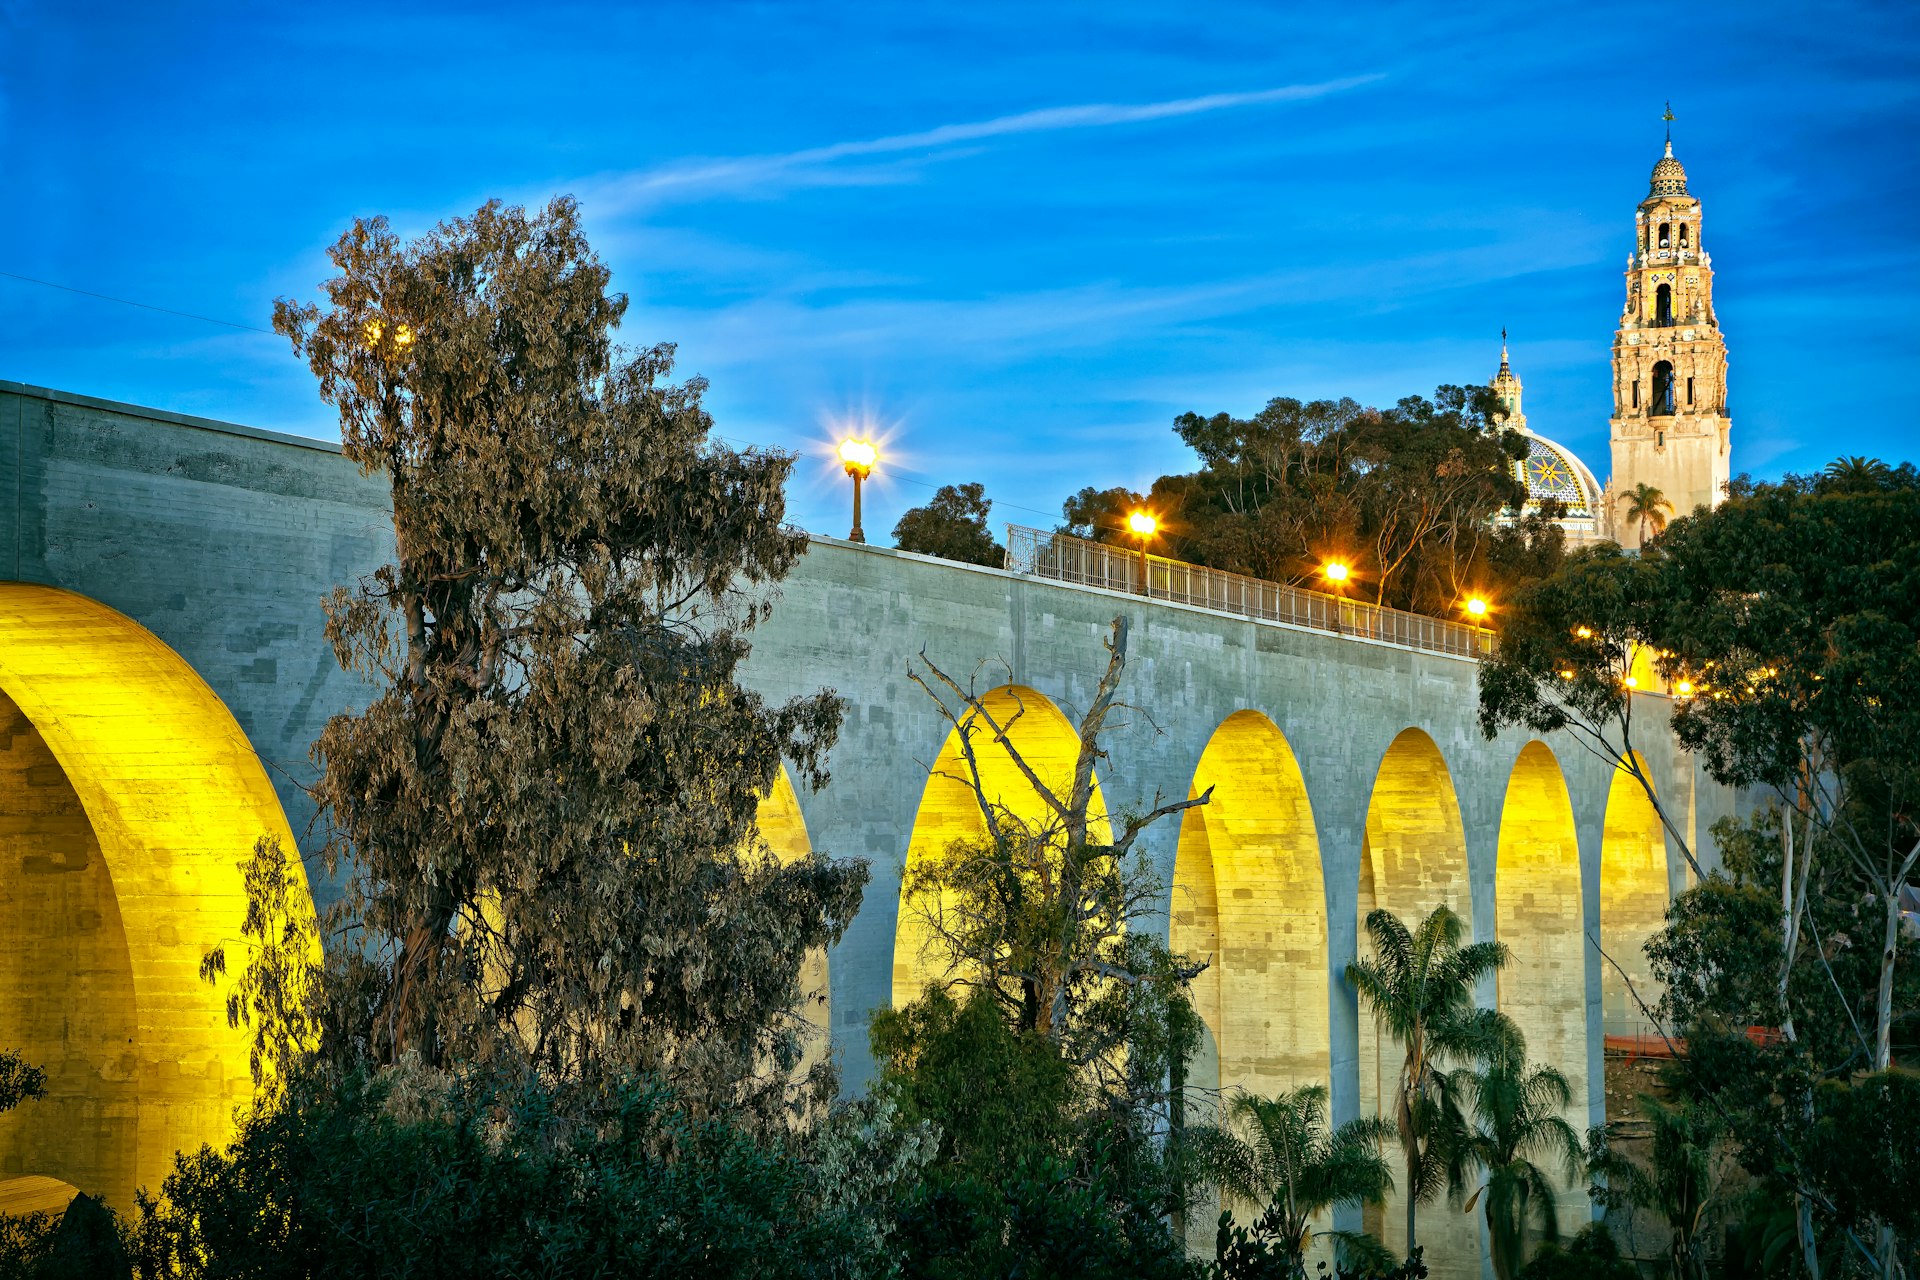 Cabrillo Bridge, Balboa Park, San Diego, CA